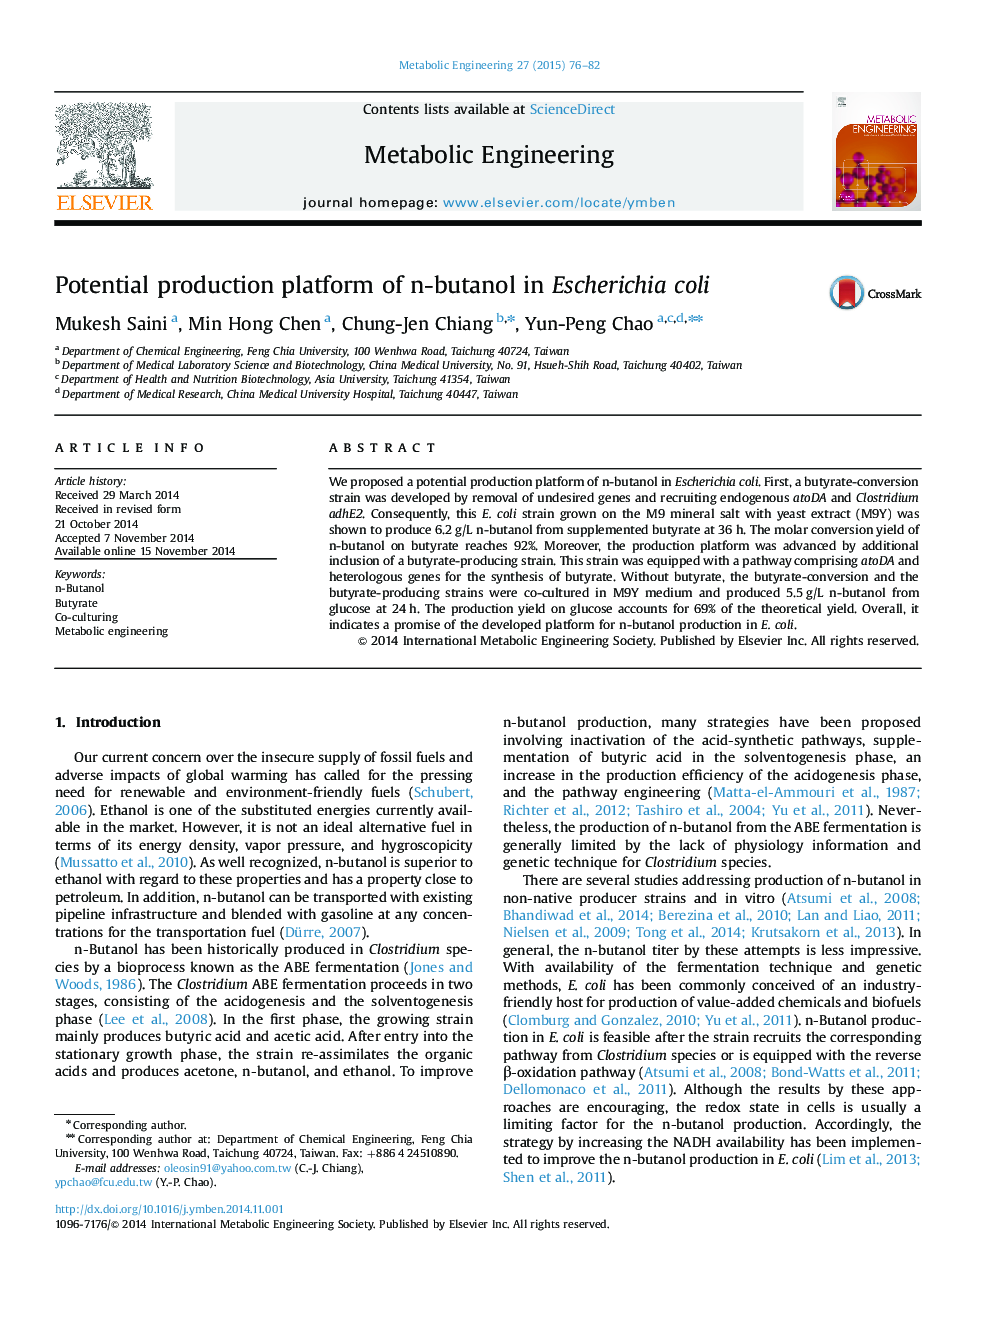 Potential production platform of n-butanol in Escherichia coli